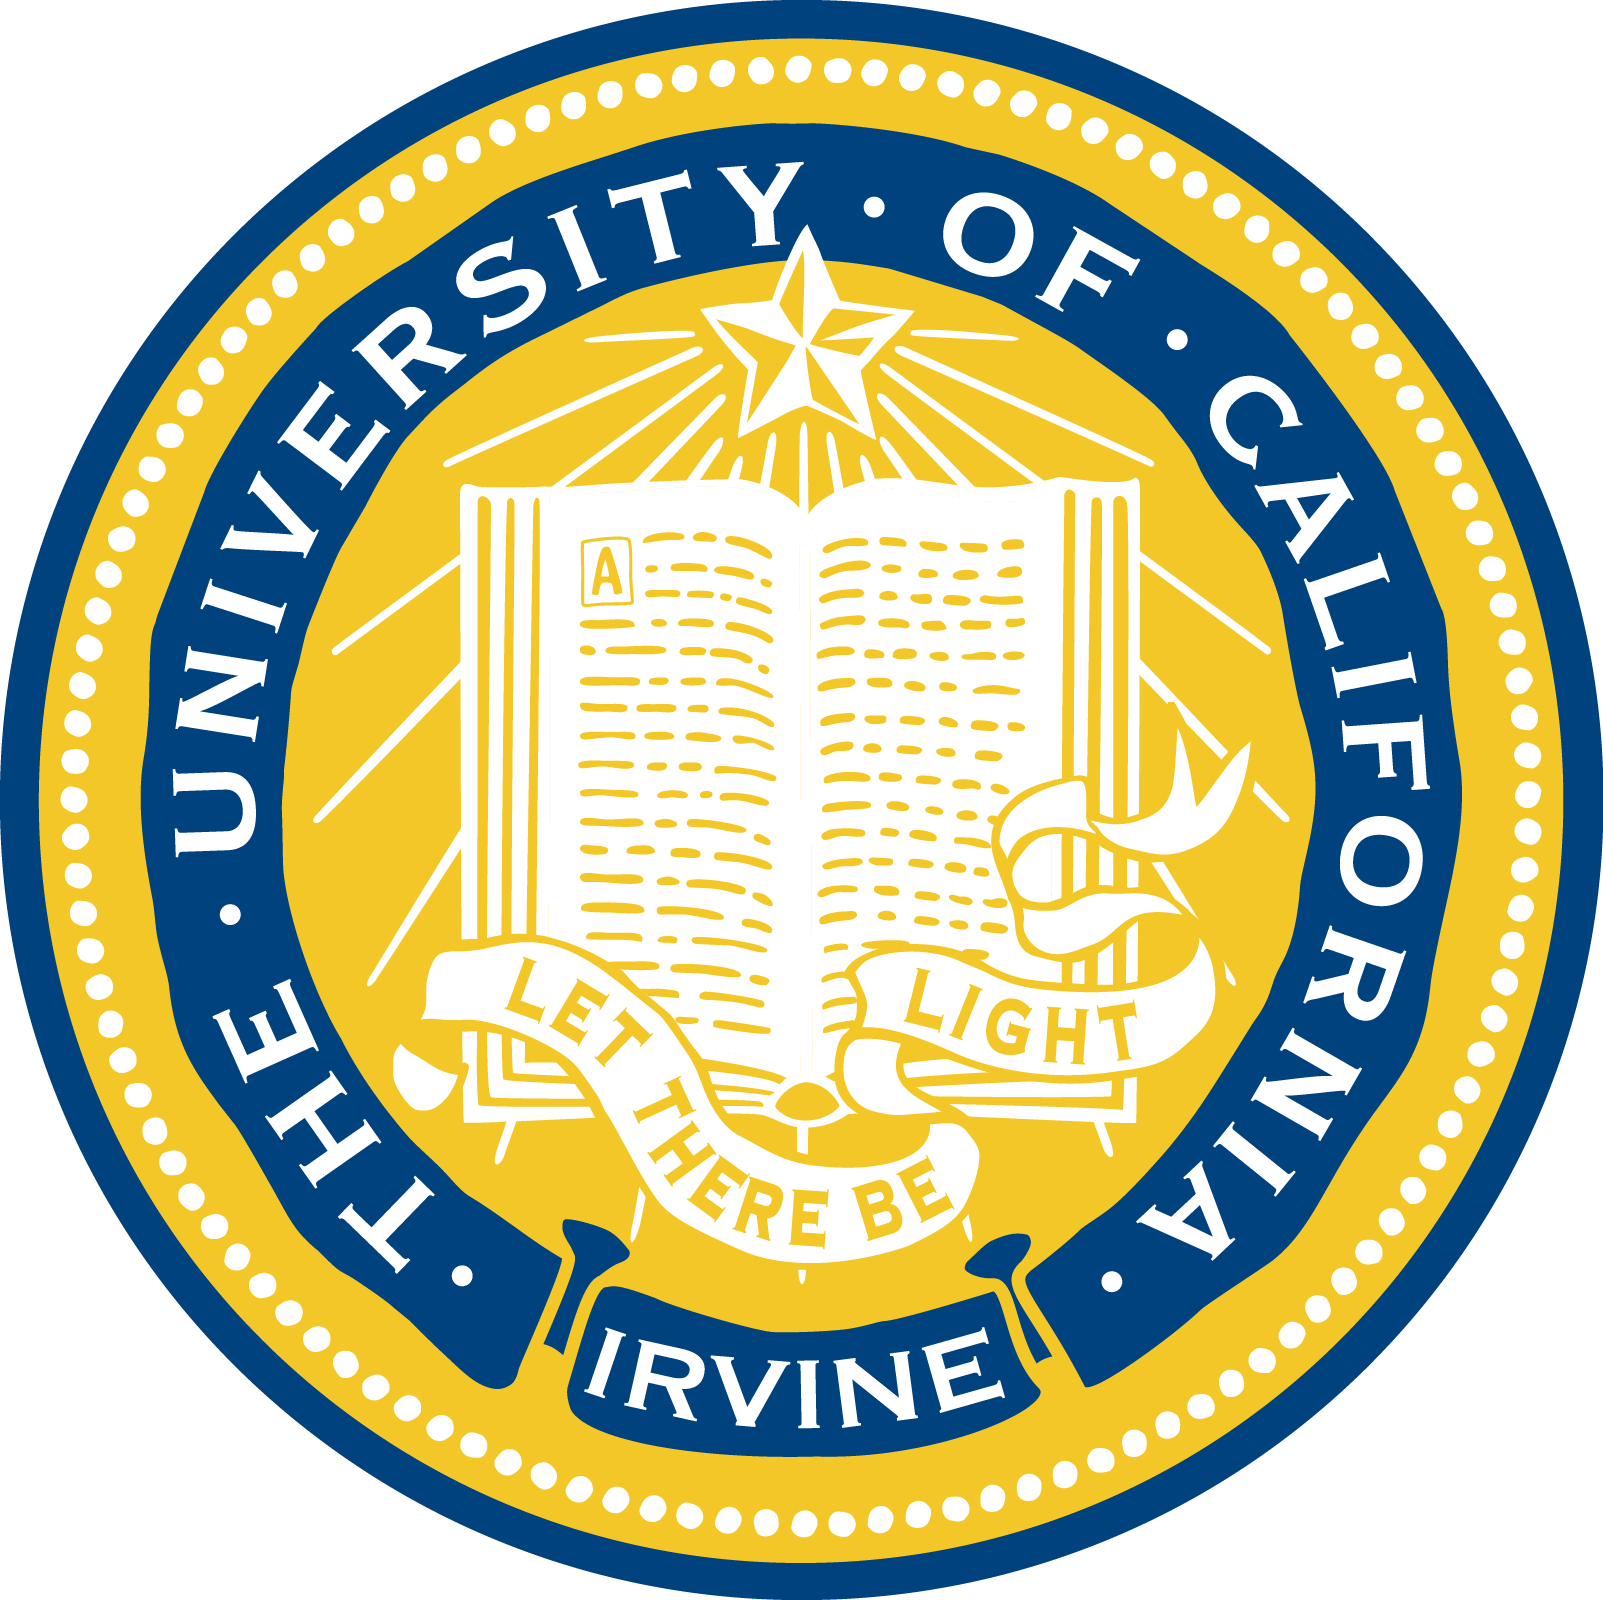 Irvine - The University of California